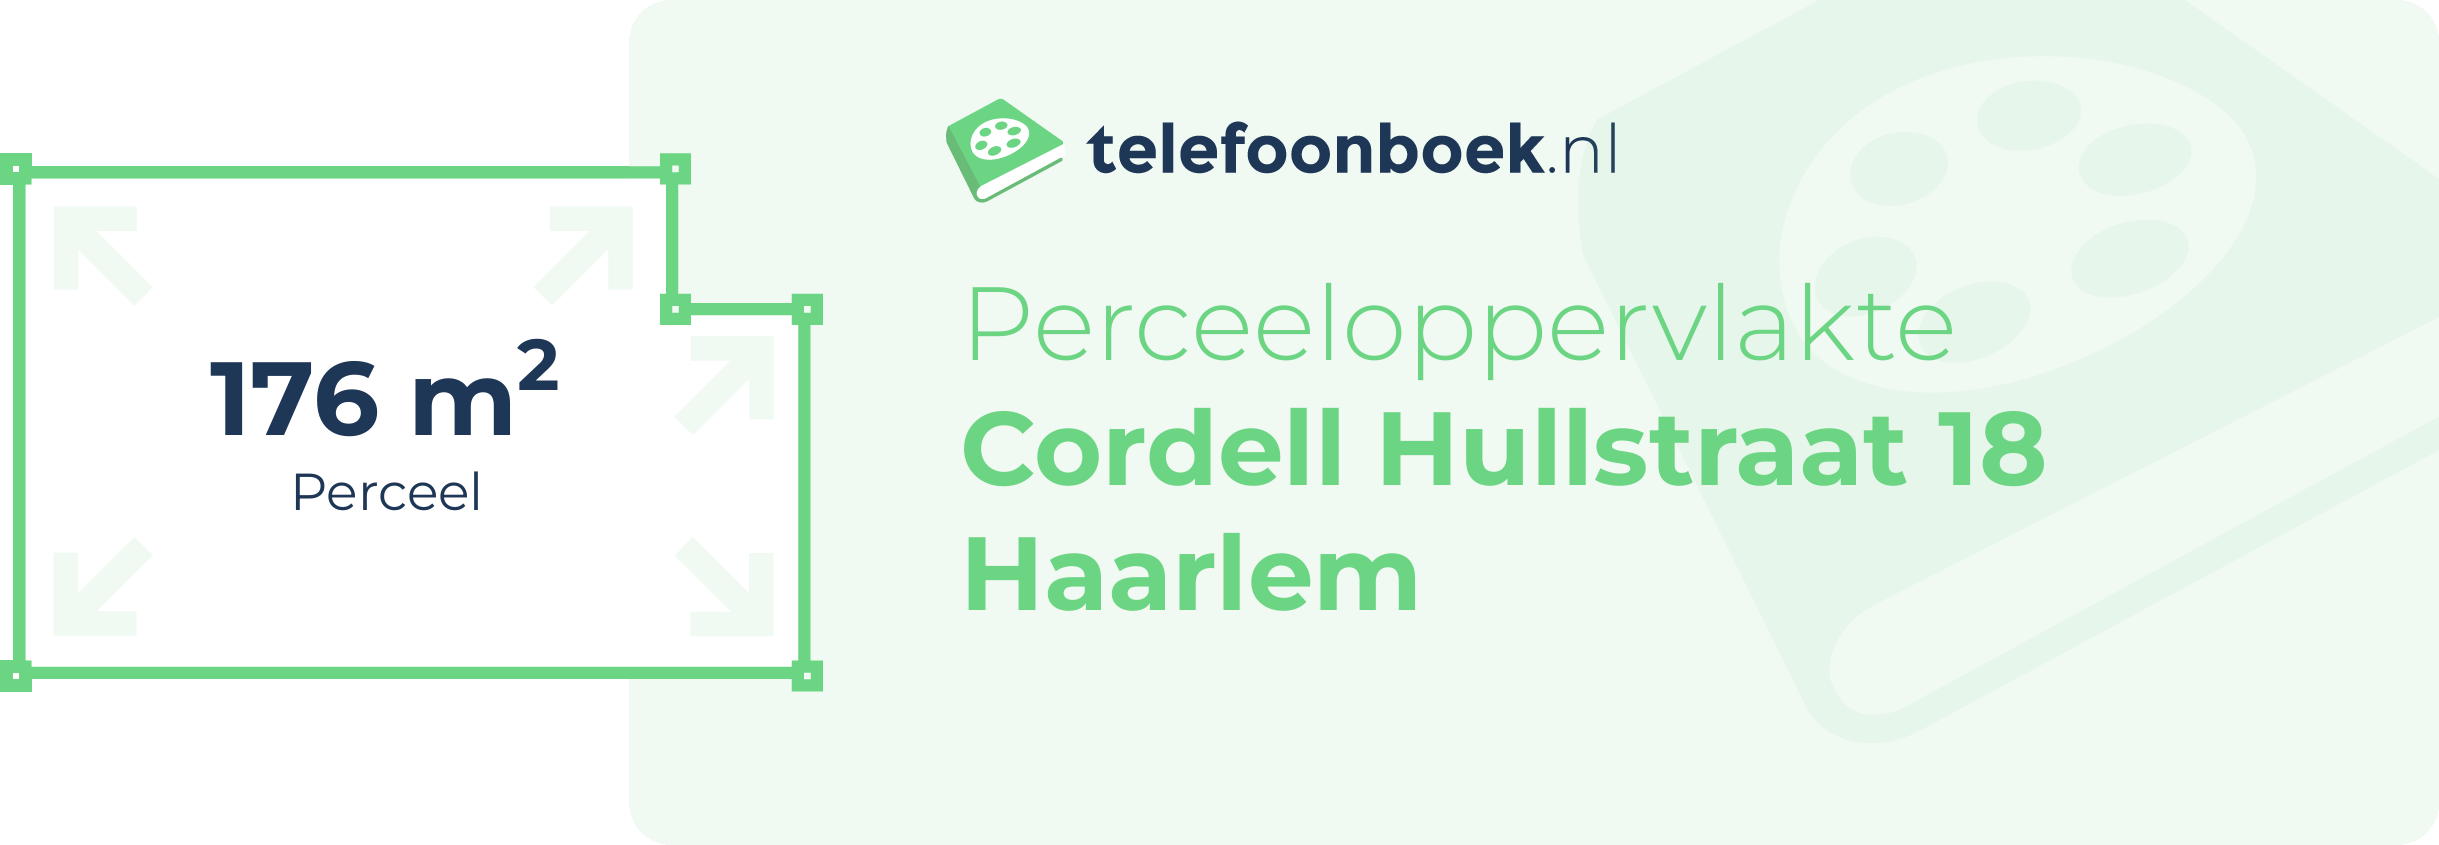 Perceeloppervlakte Cordell Hullstraat 18 Haarlem